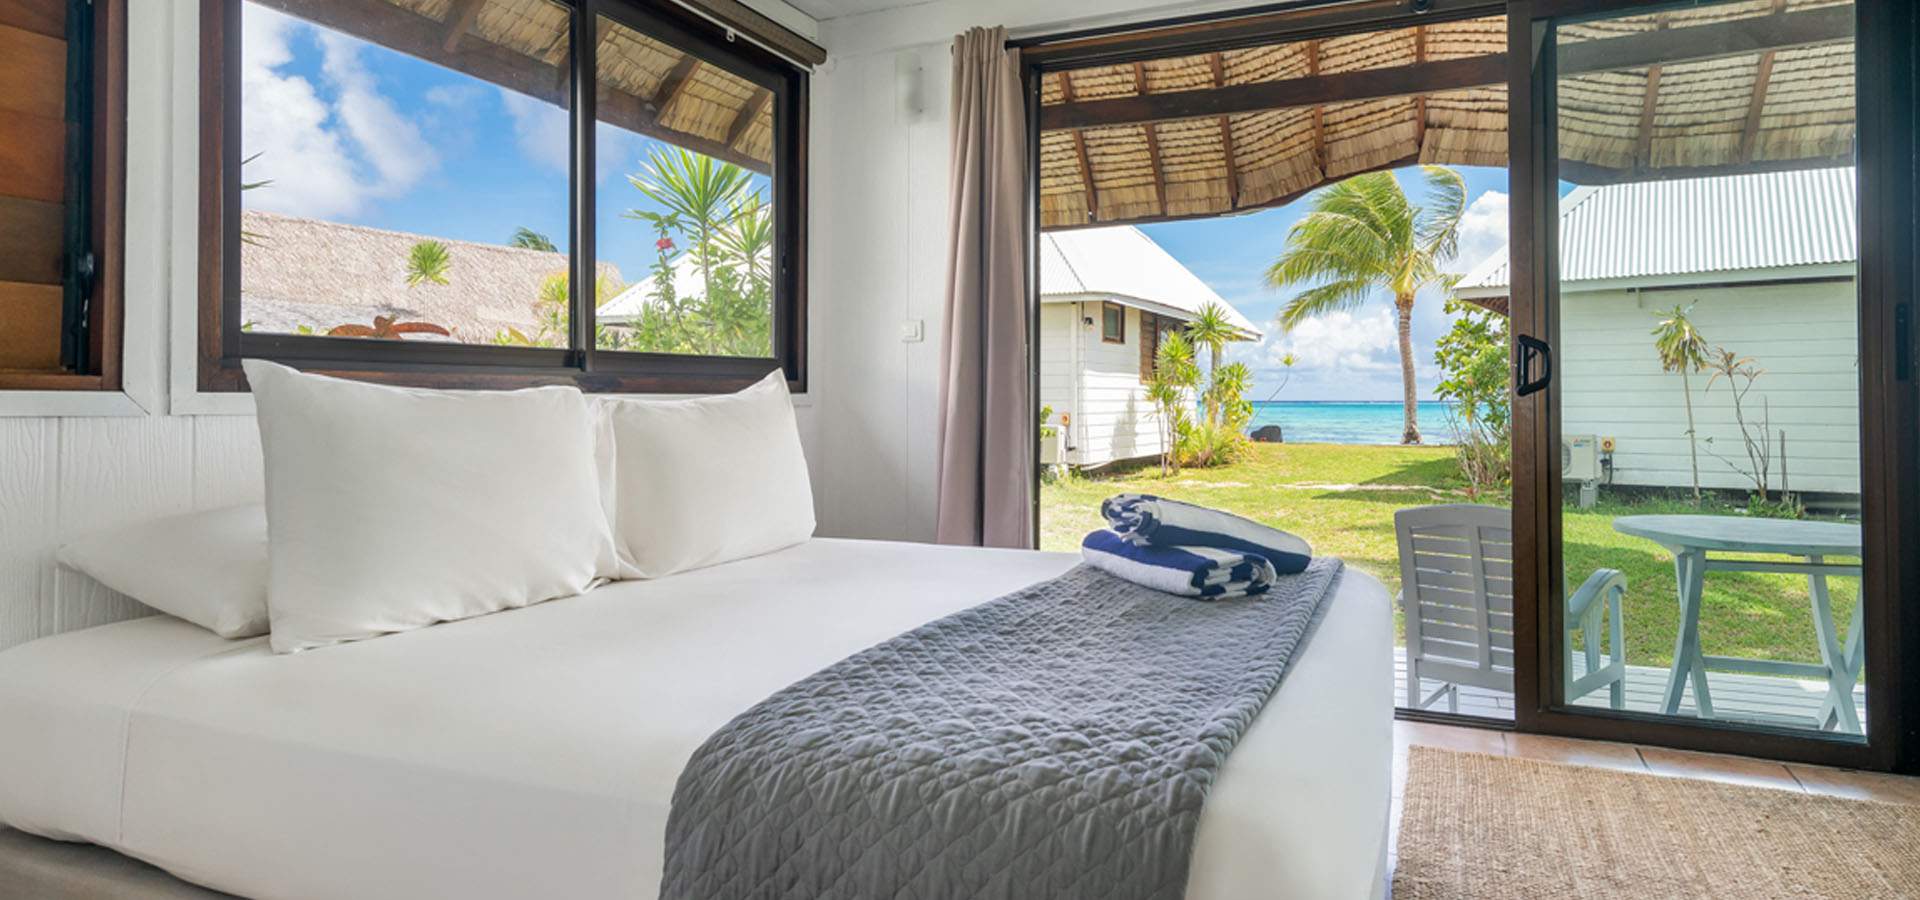 Moorea Island Beach Hotel bedroom